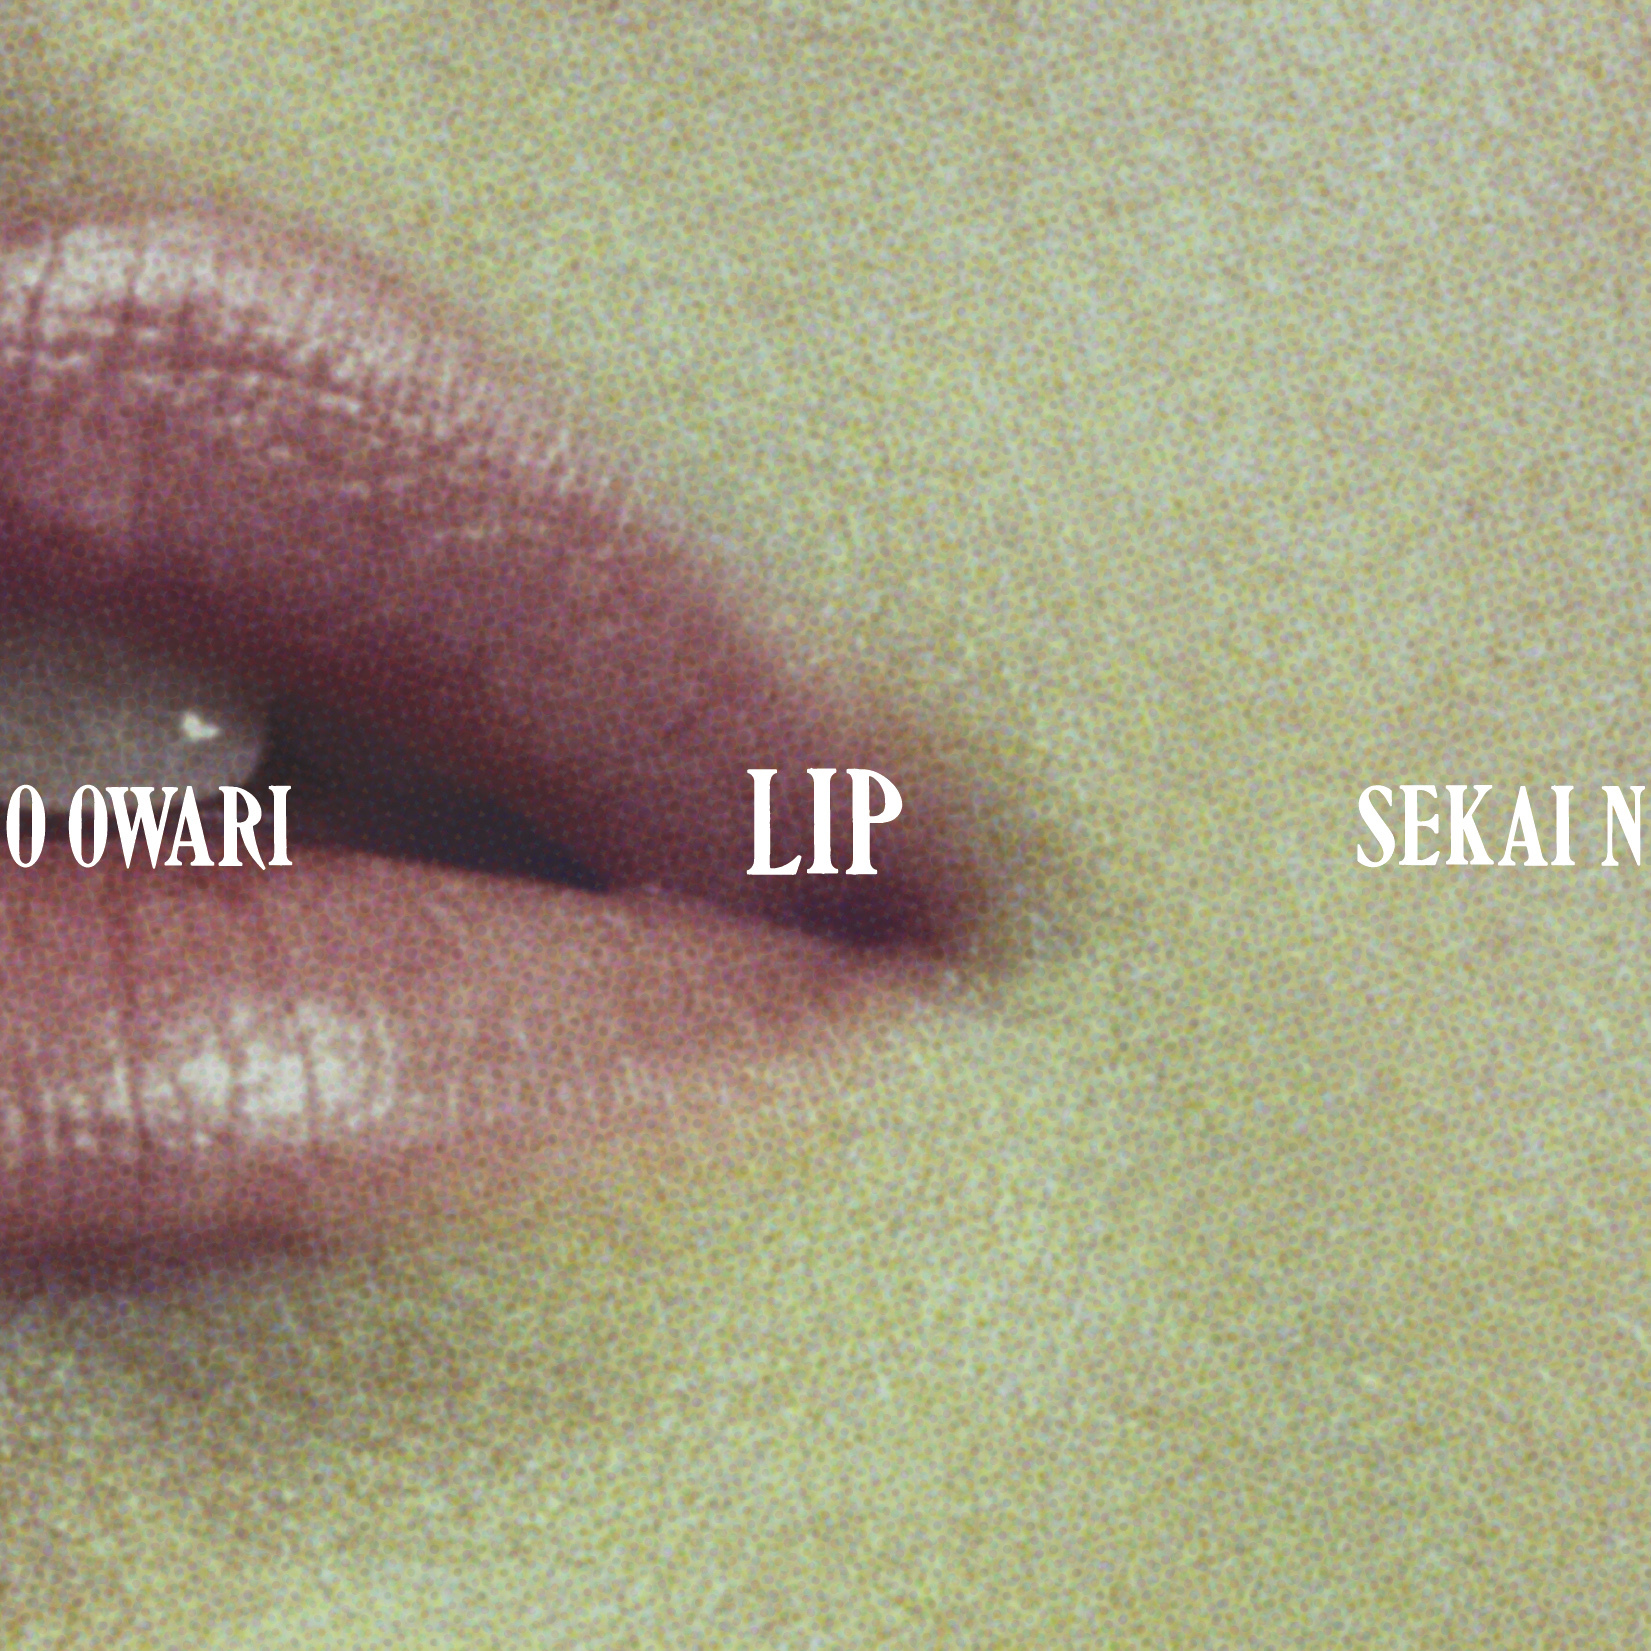 『Lip』